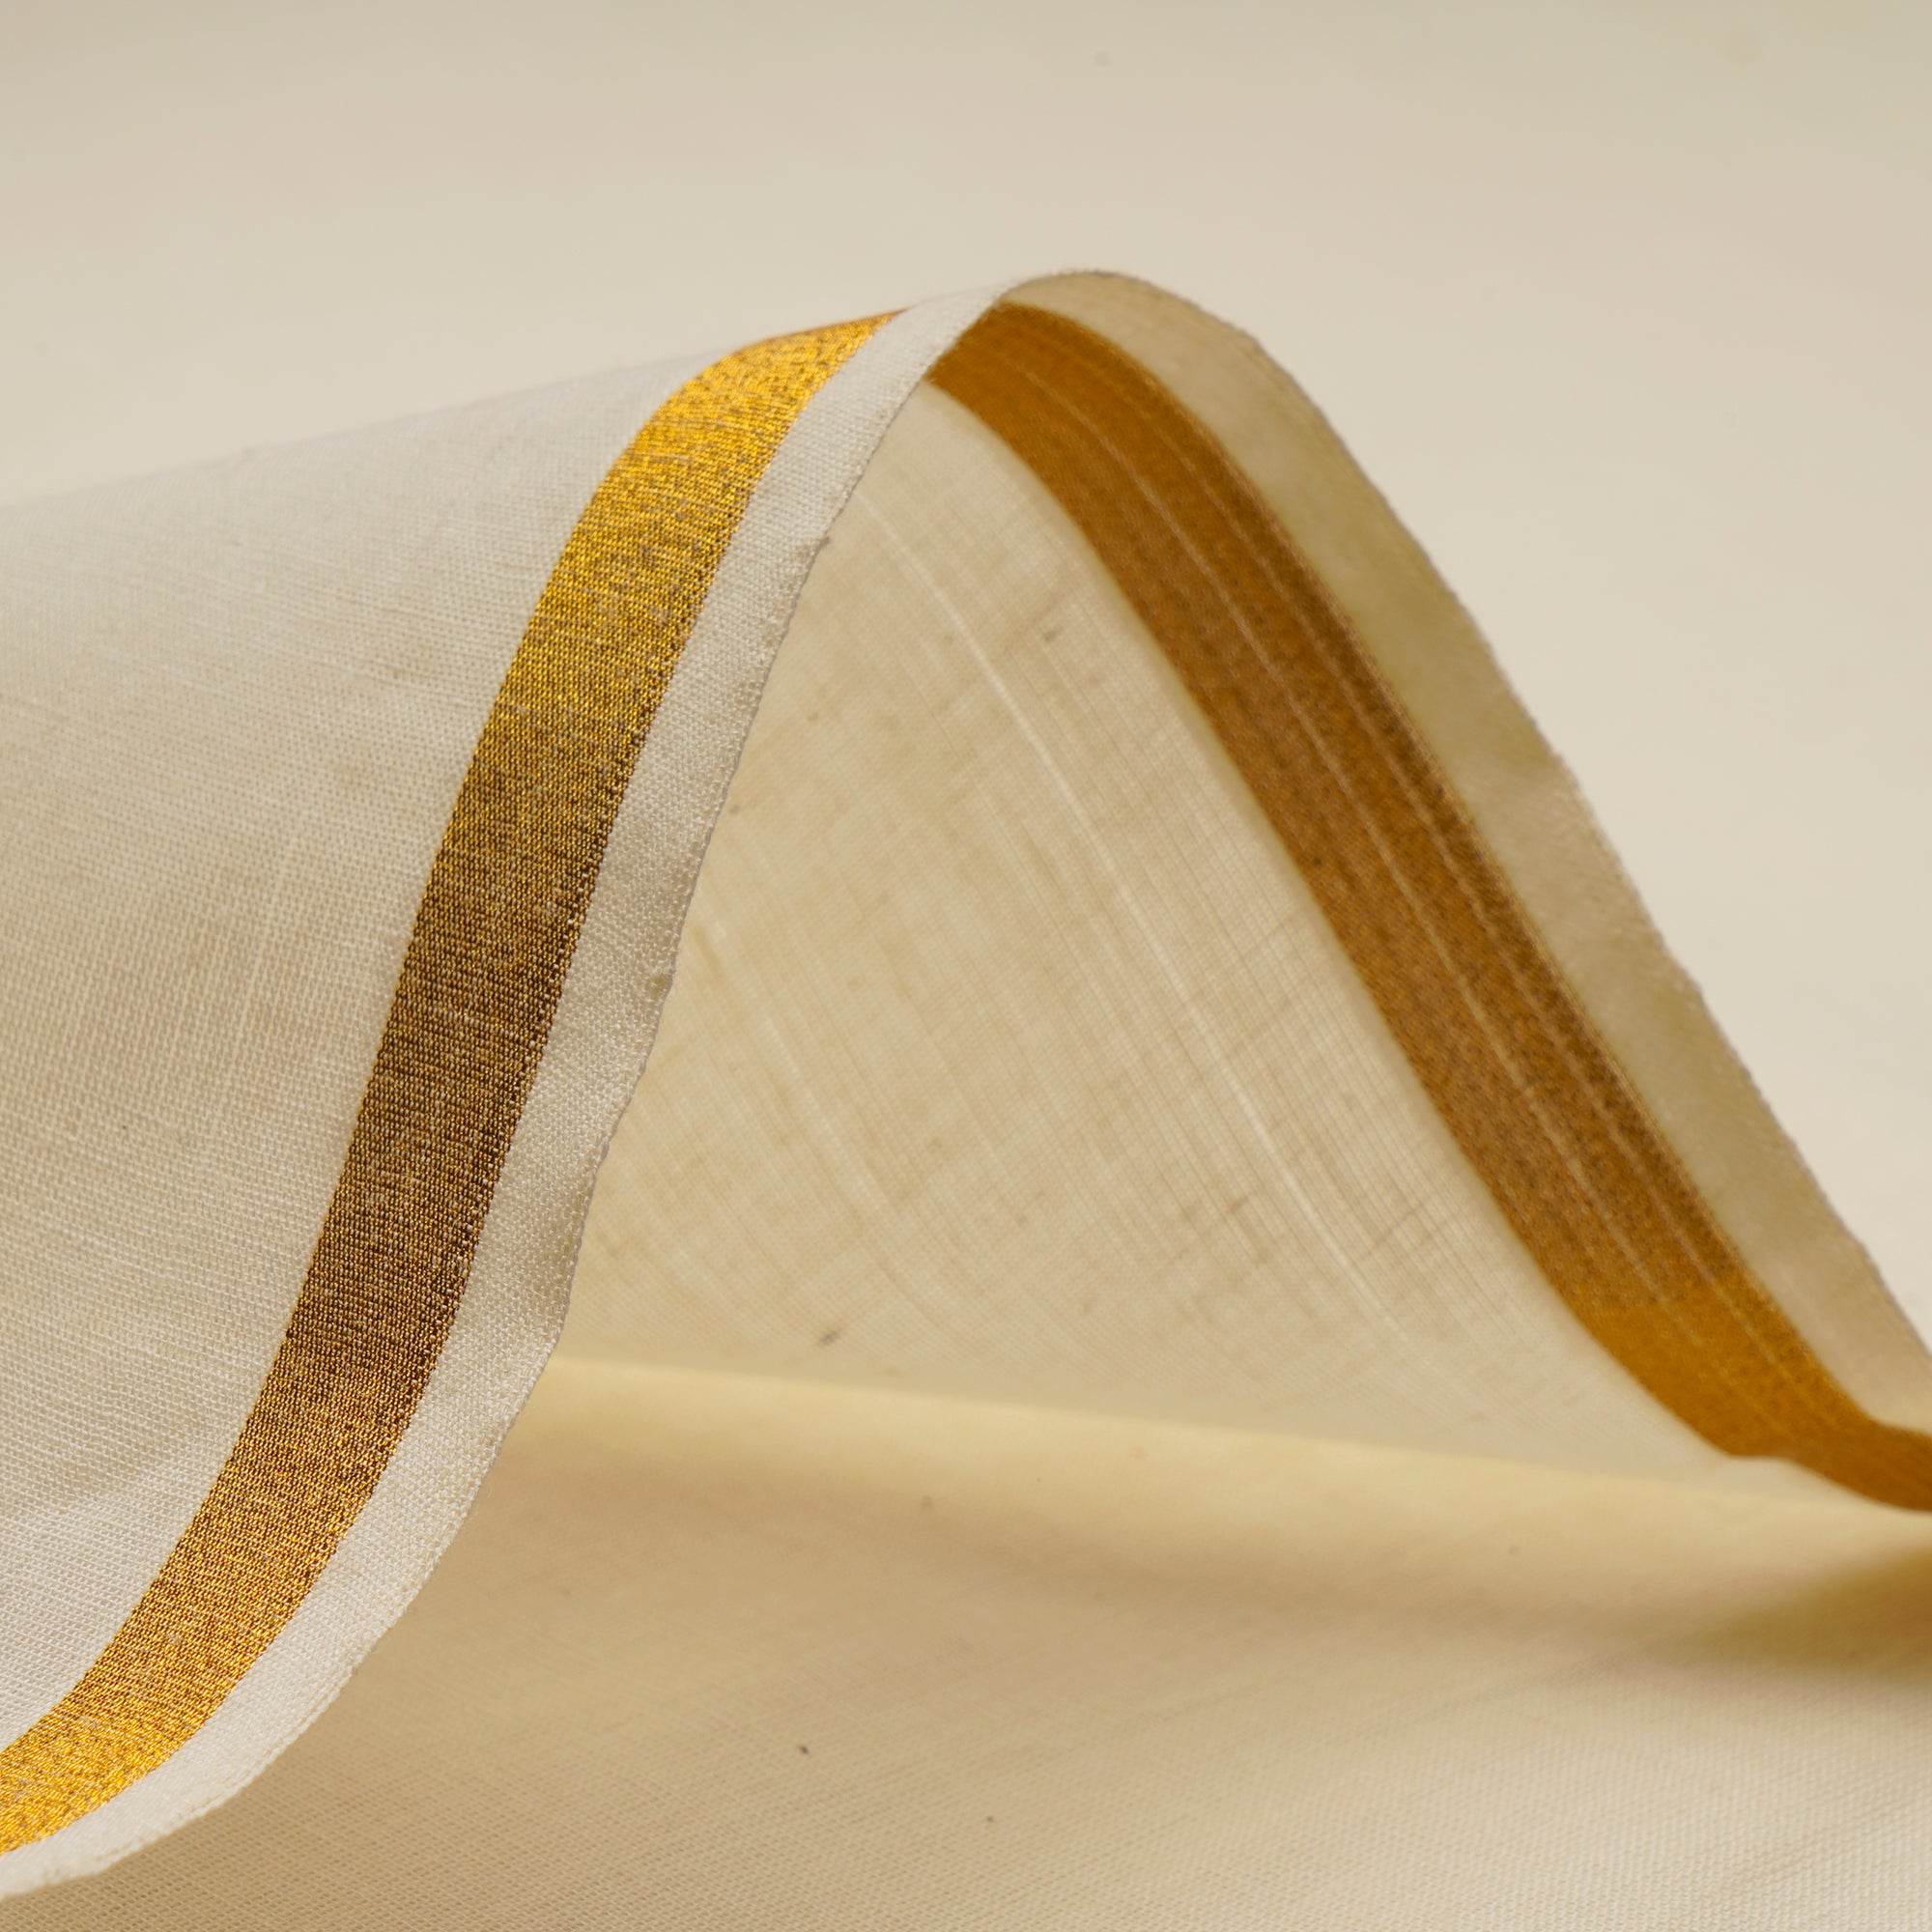 Off White Color Cotton Handloom Fabric with Zari Border